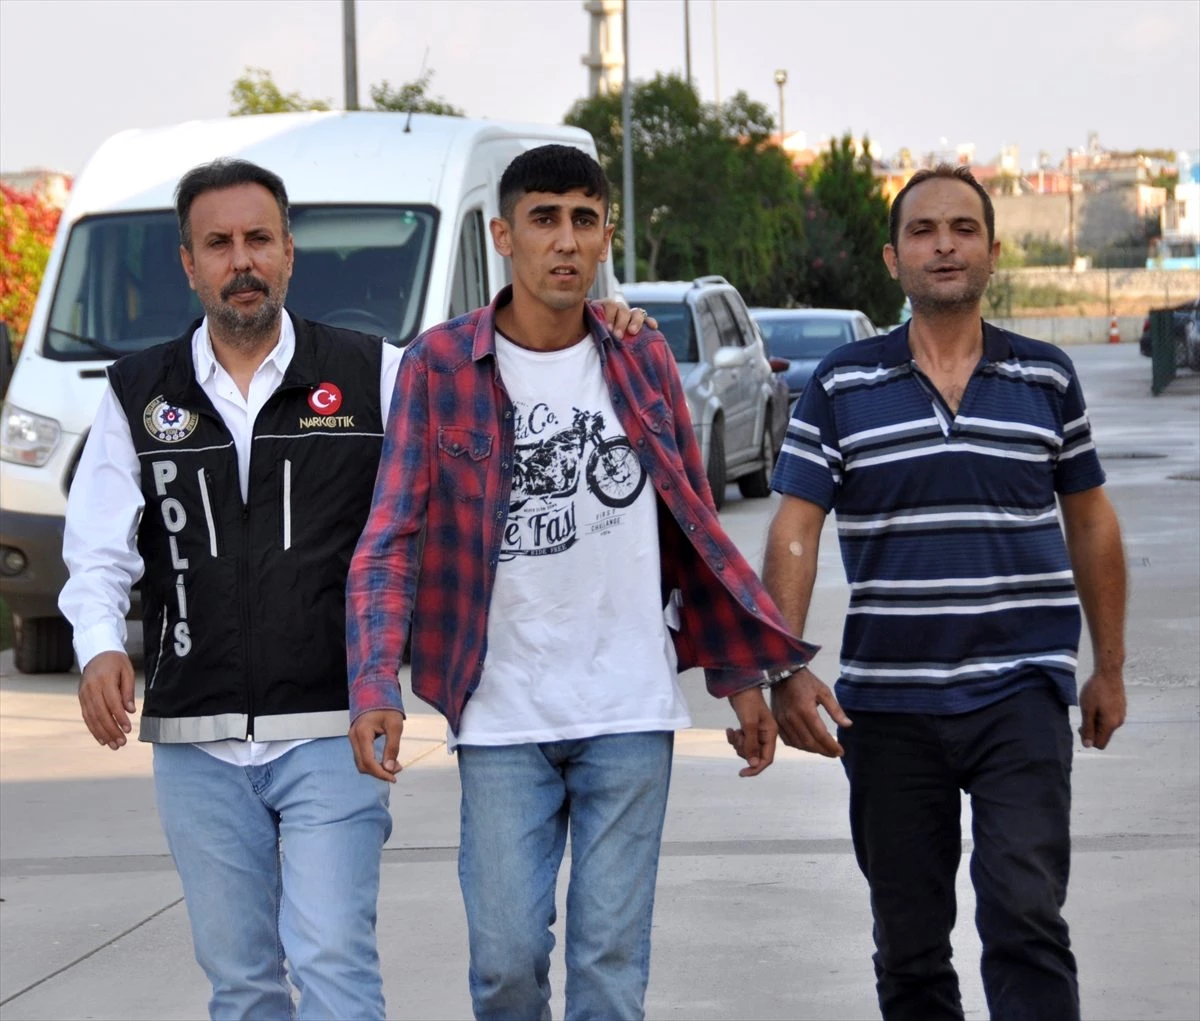 Adana Da Uyusturucu Sattigi Iddiasiyla 2 Supheli Tutuklandi Son Dakika